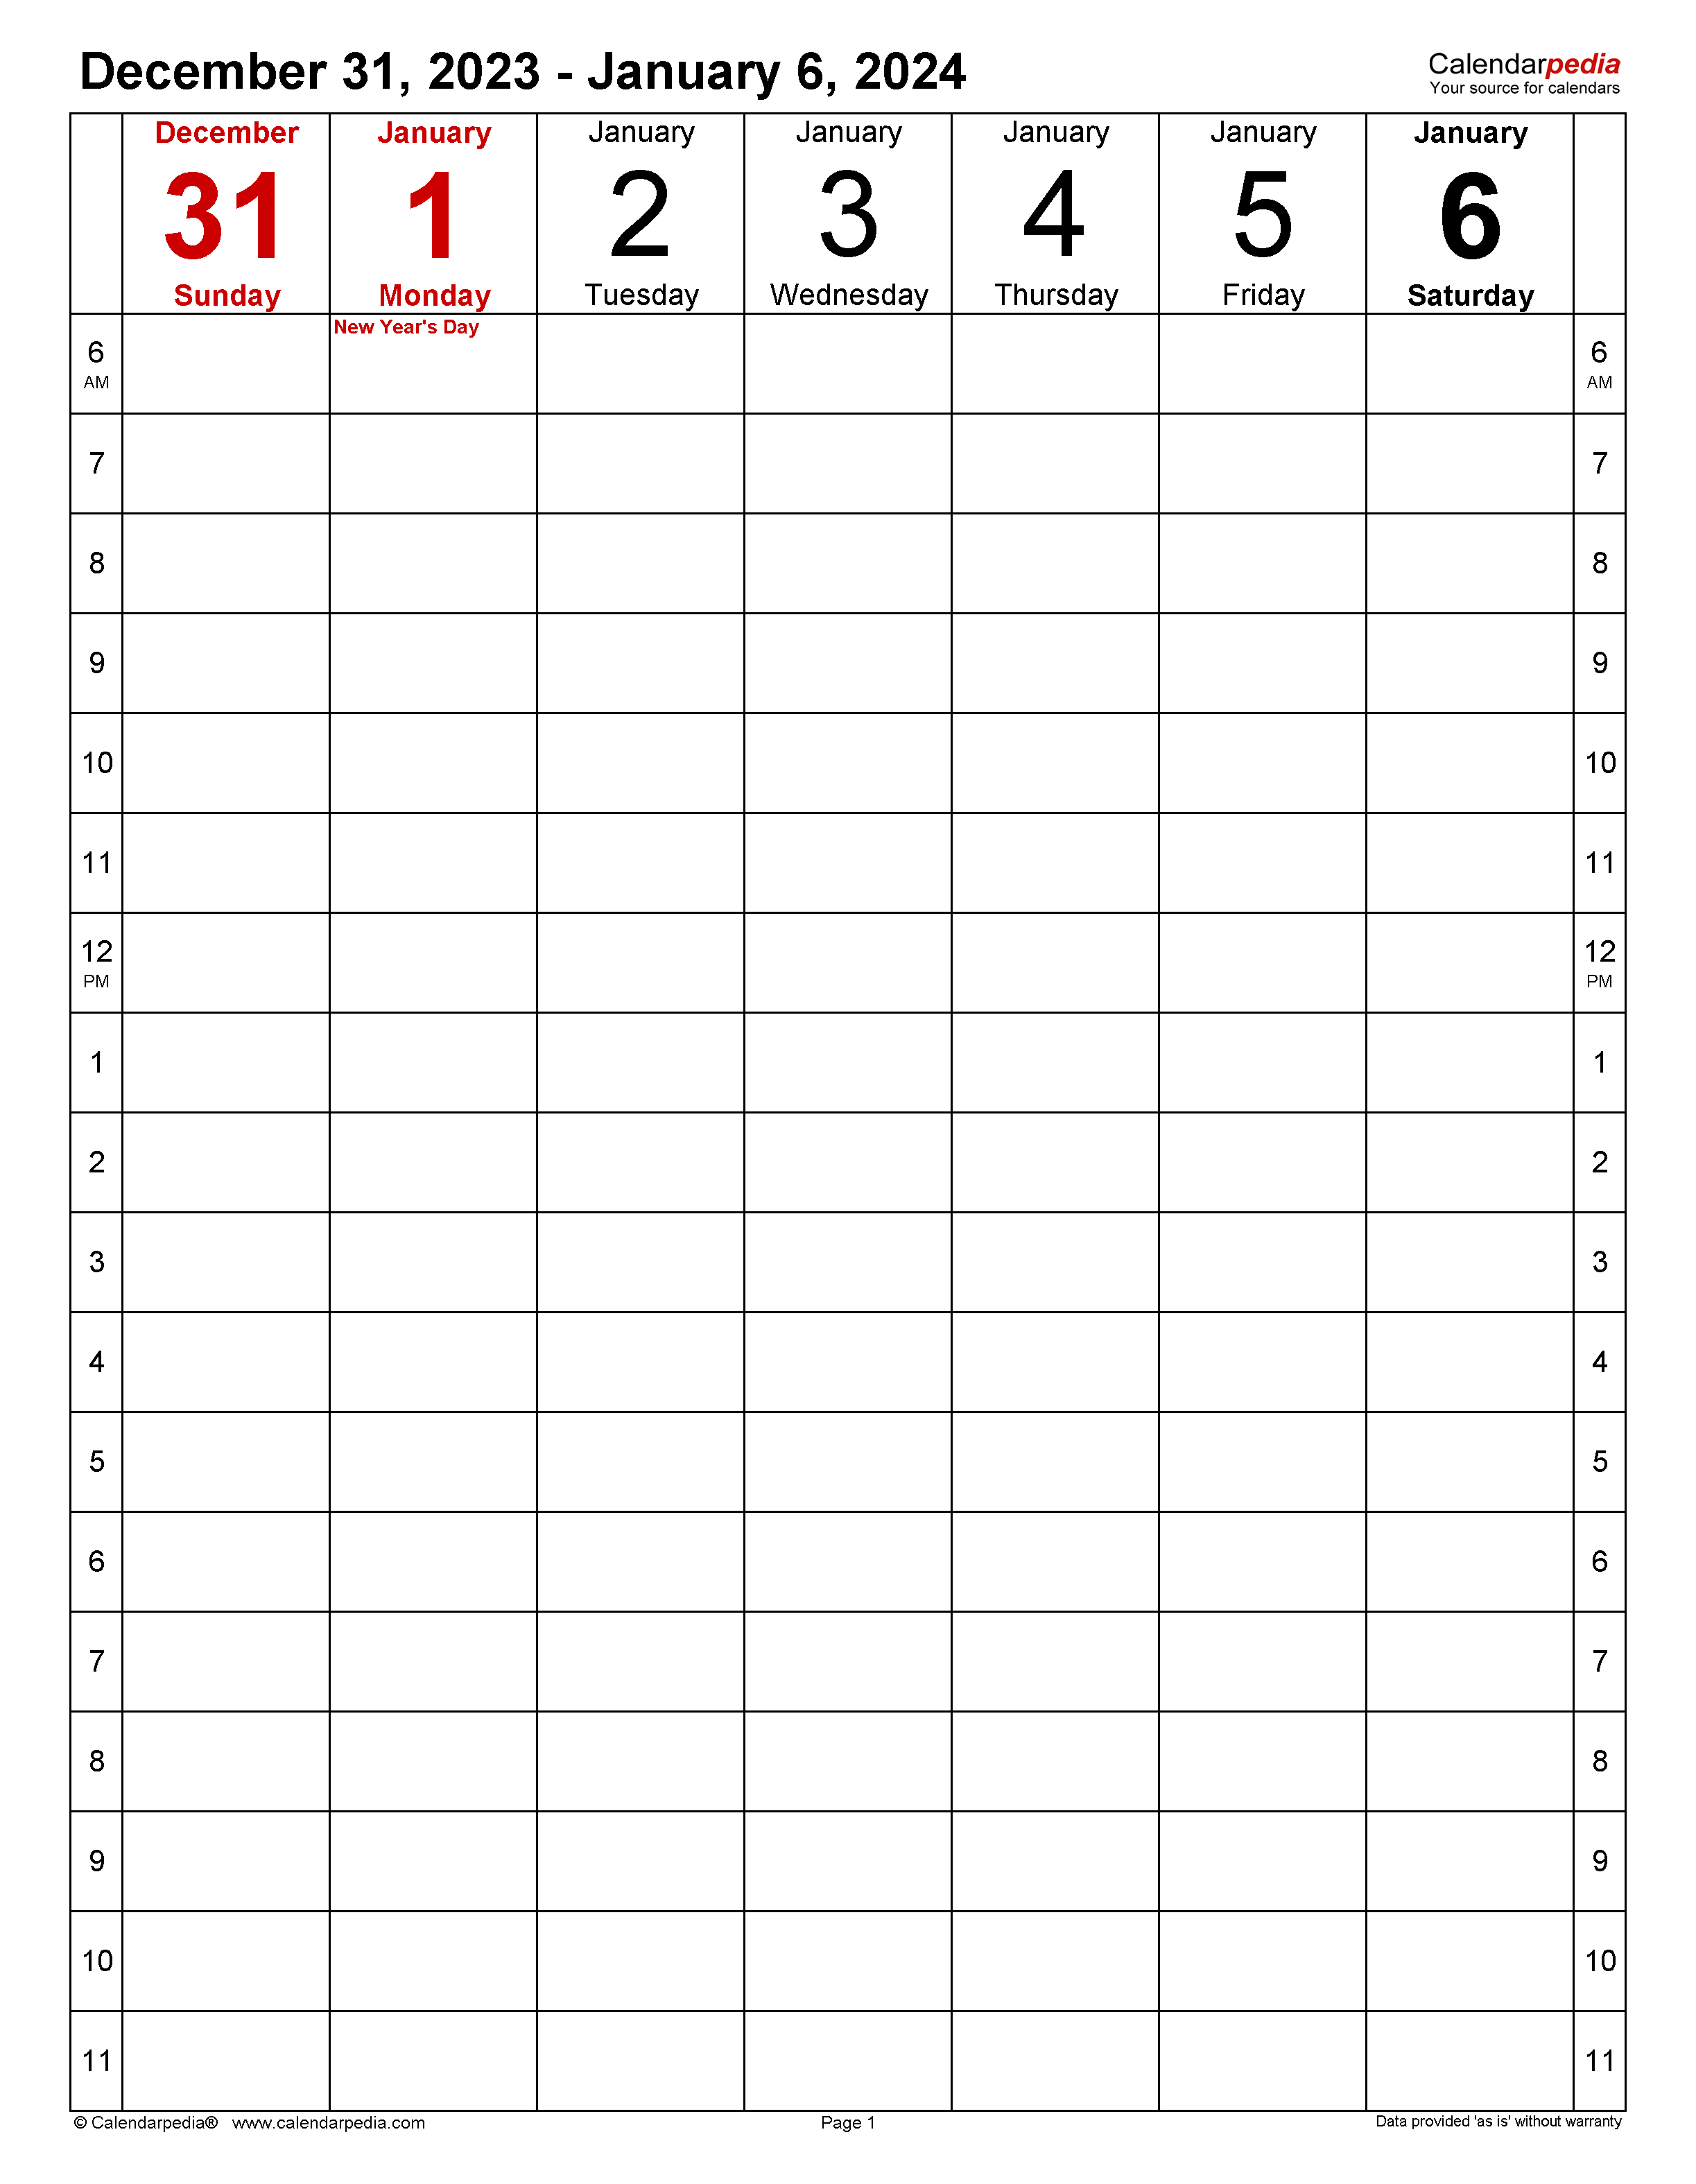 Weekly Calendars 2024 For Pdf - 12 Free Printable Templates with Free Printable Calendar 2024 With Time Slots